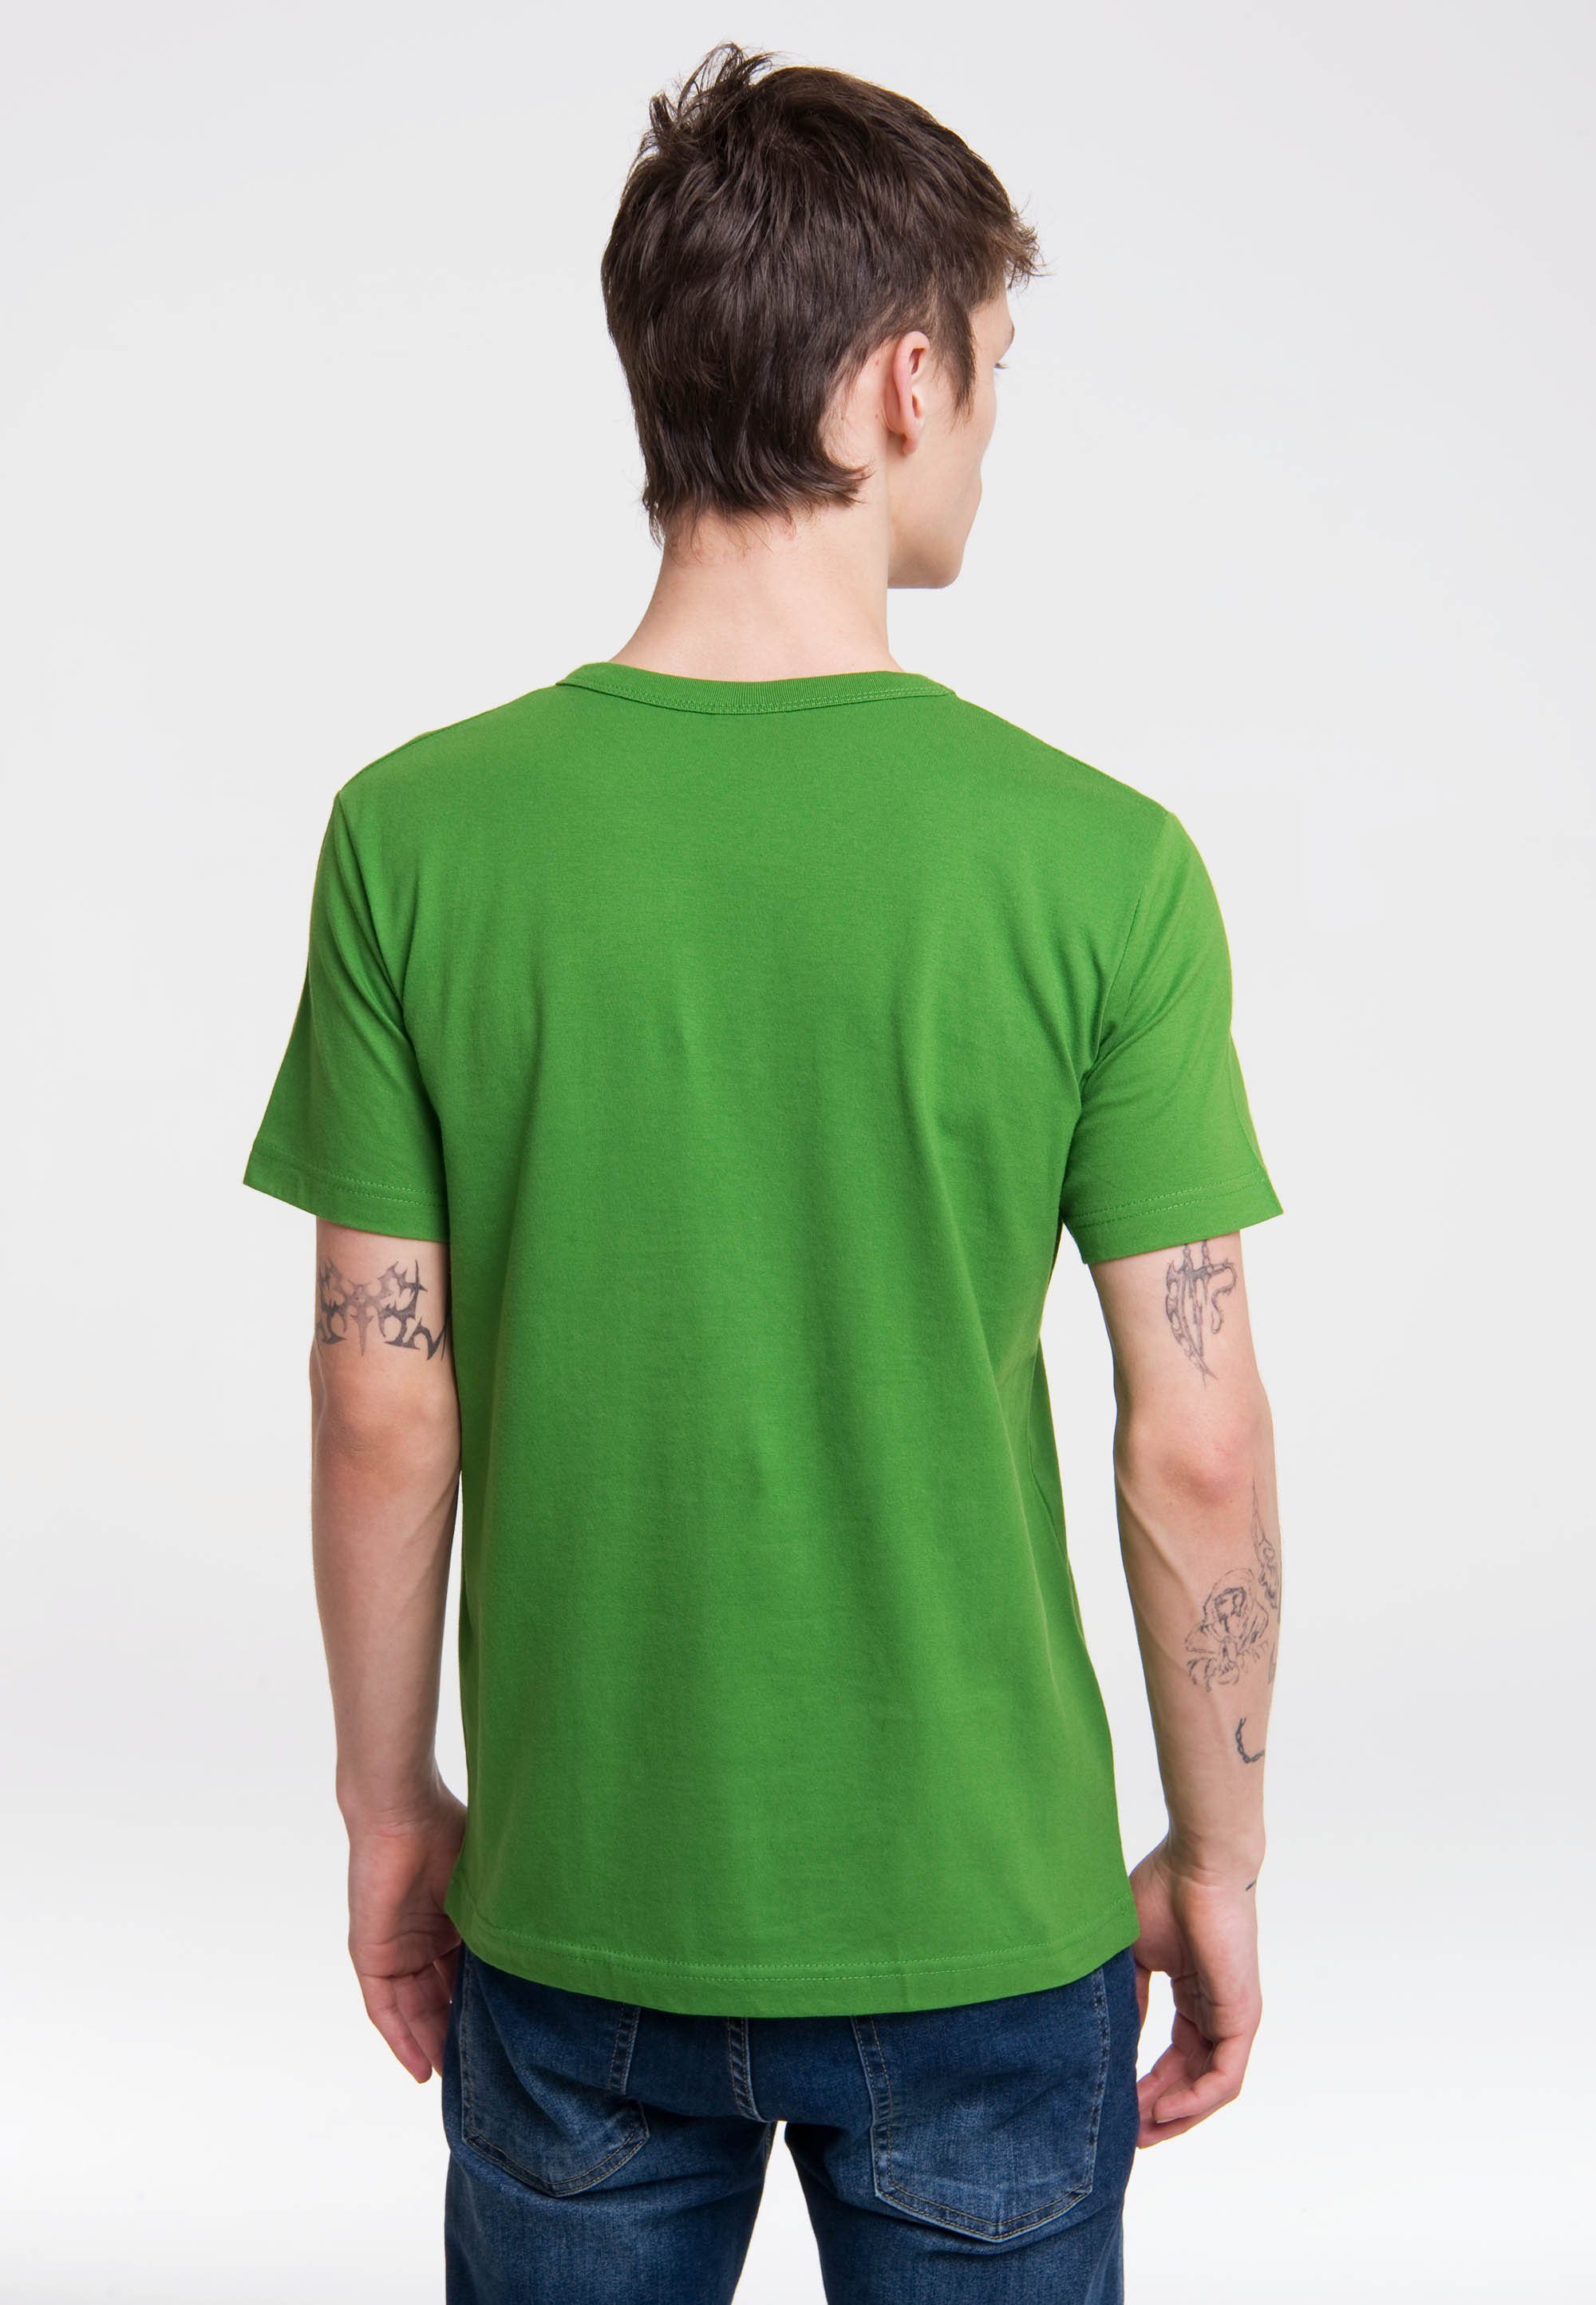 & olivgrün-grün LOGOSHIRT lizenziertem Sylvester T-Shirt mit Tweety Originaldesign